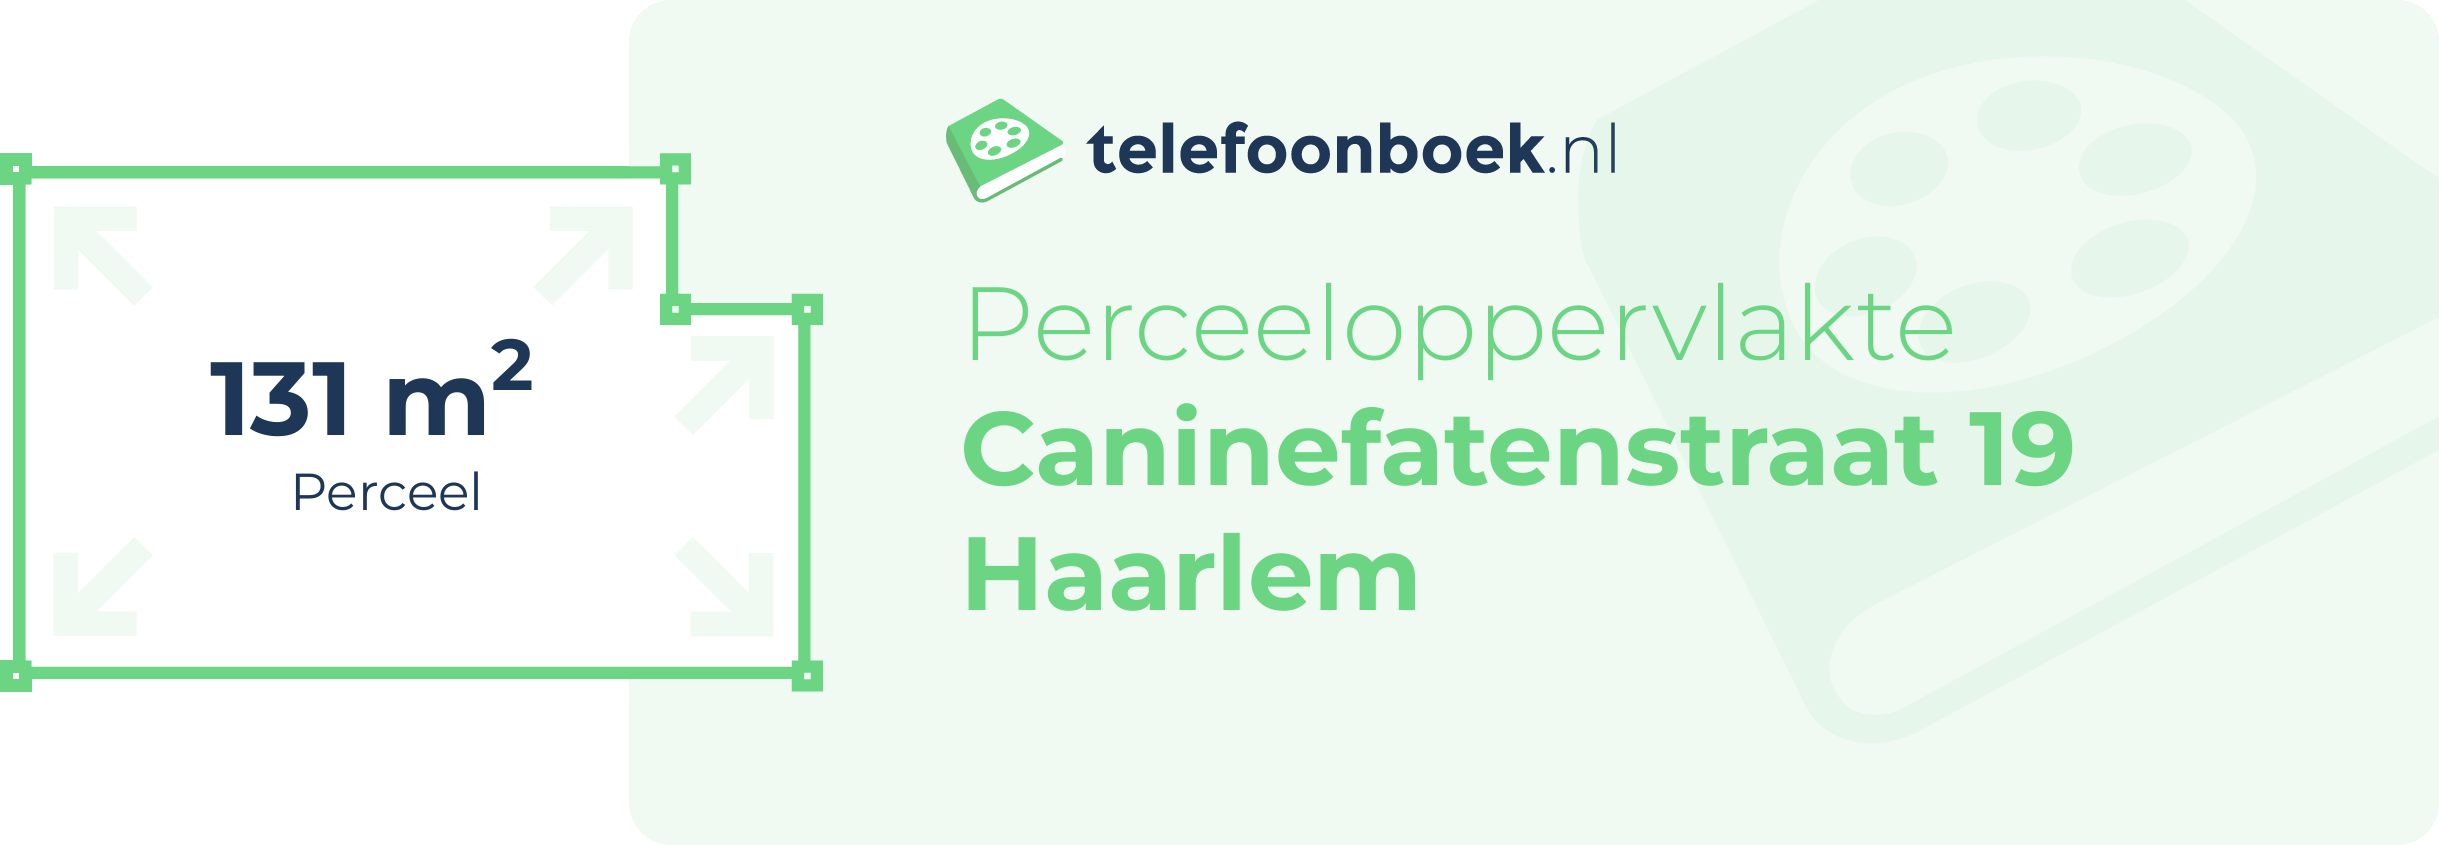 Perceeloppervlakte Caninefatenstraat 19 Haarlem